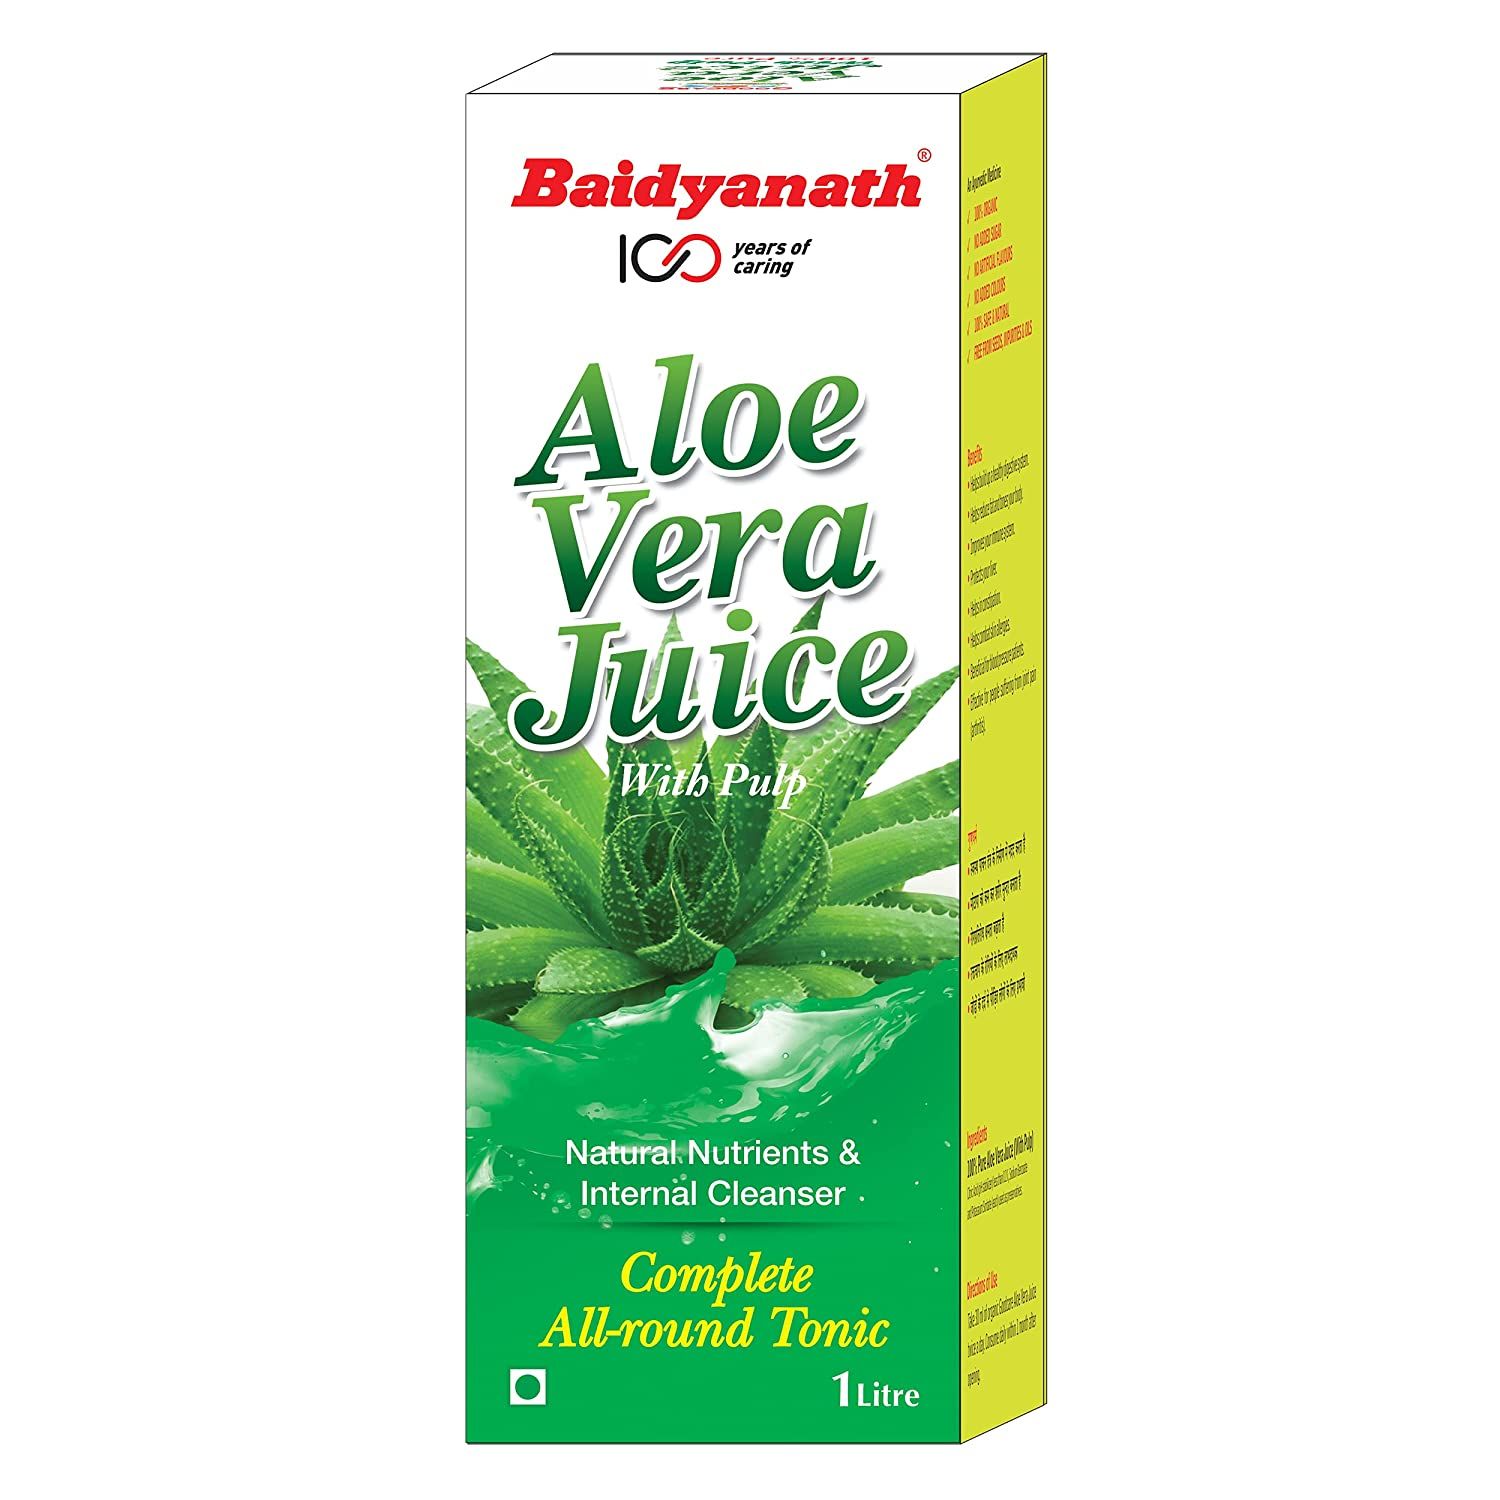 Baidyanath Aloe Vera Juice Image